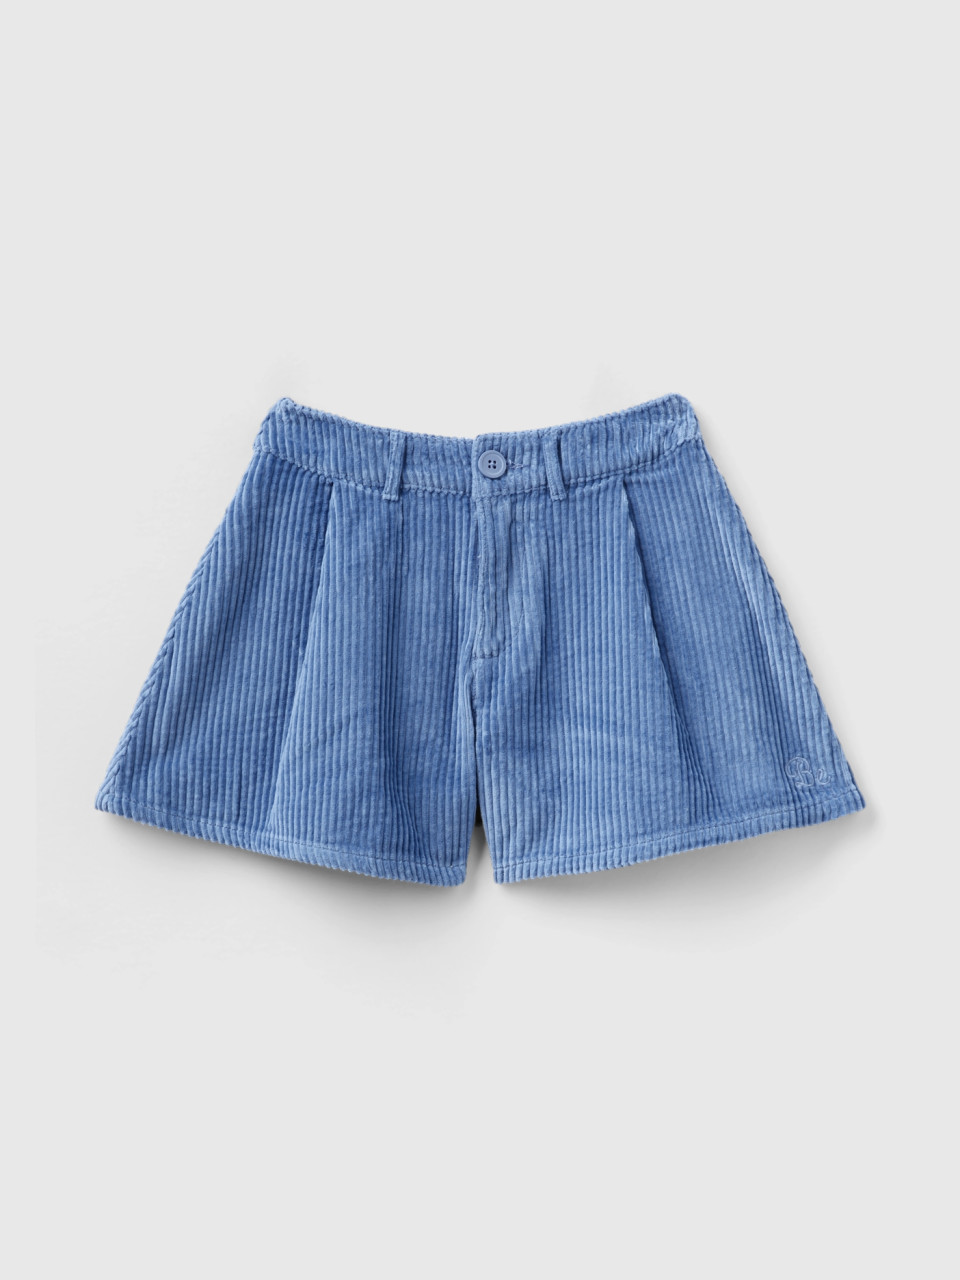 Benetton, Corduroy Bermuda Shorts, Light Blue, Kids